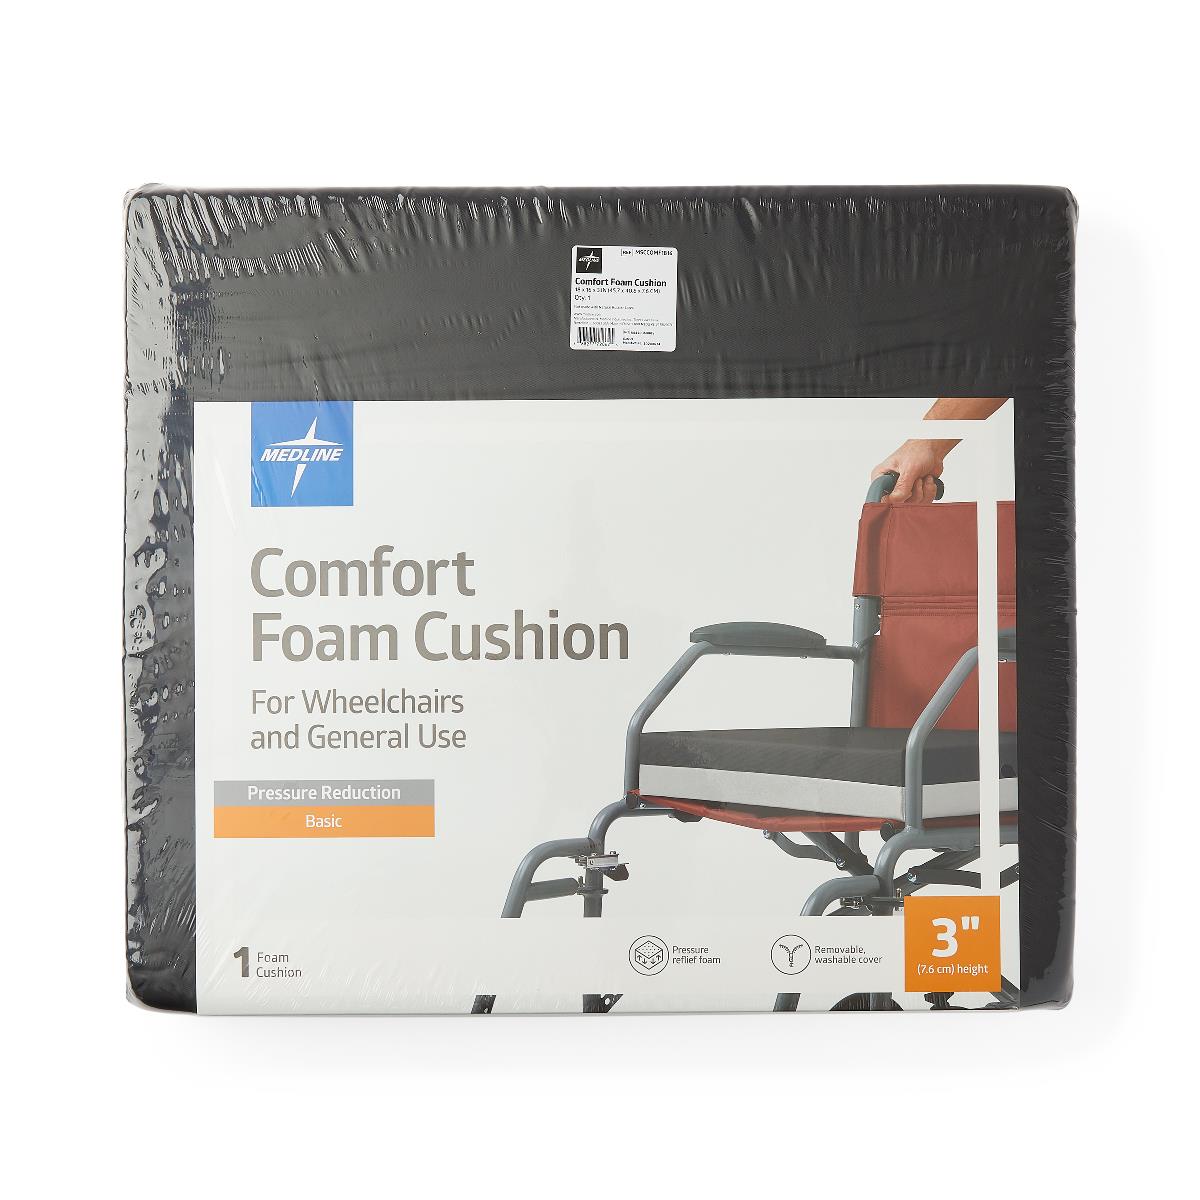 Medline Gel Foam Wheelchair Cushions for Pressure Redistribution 20 x 16 x 3